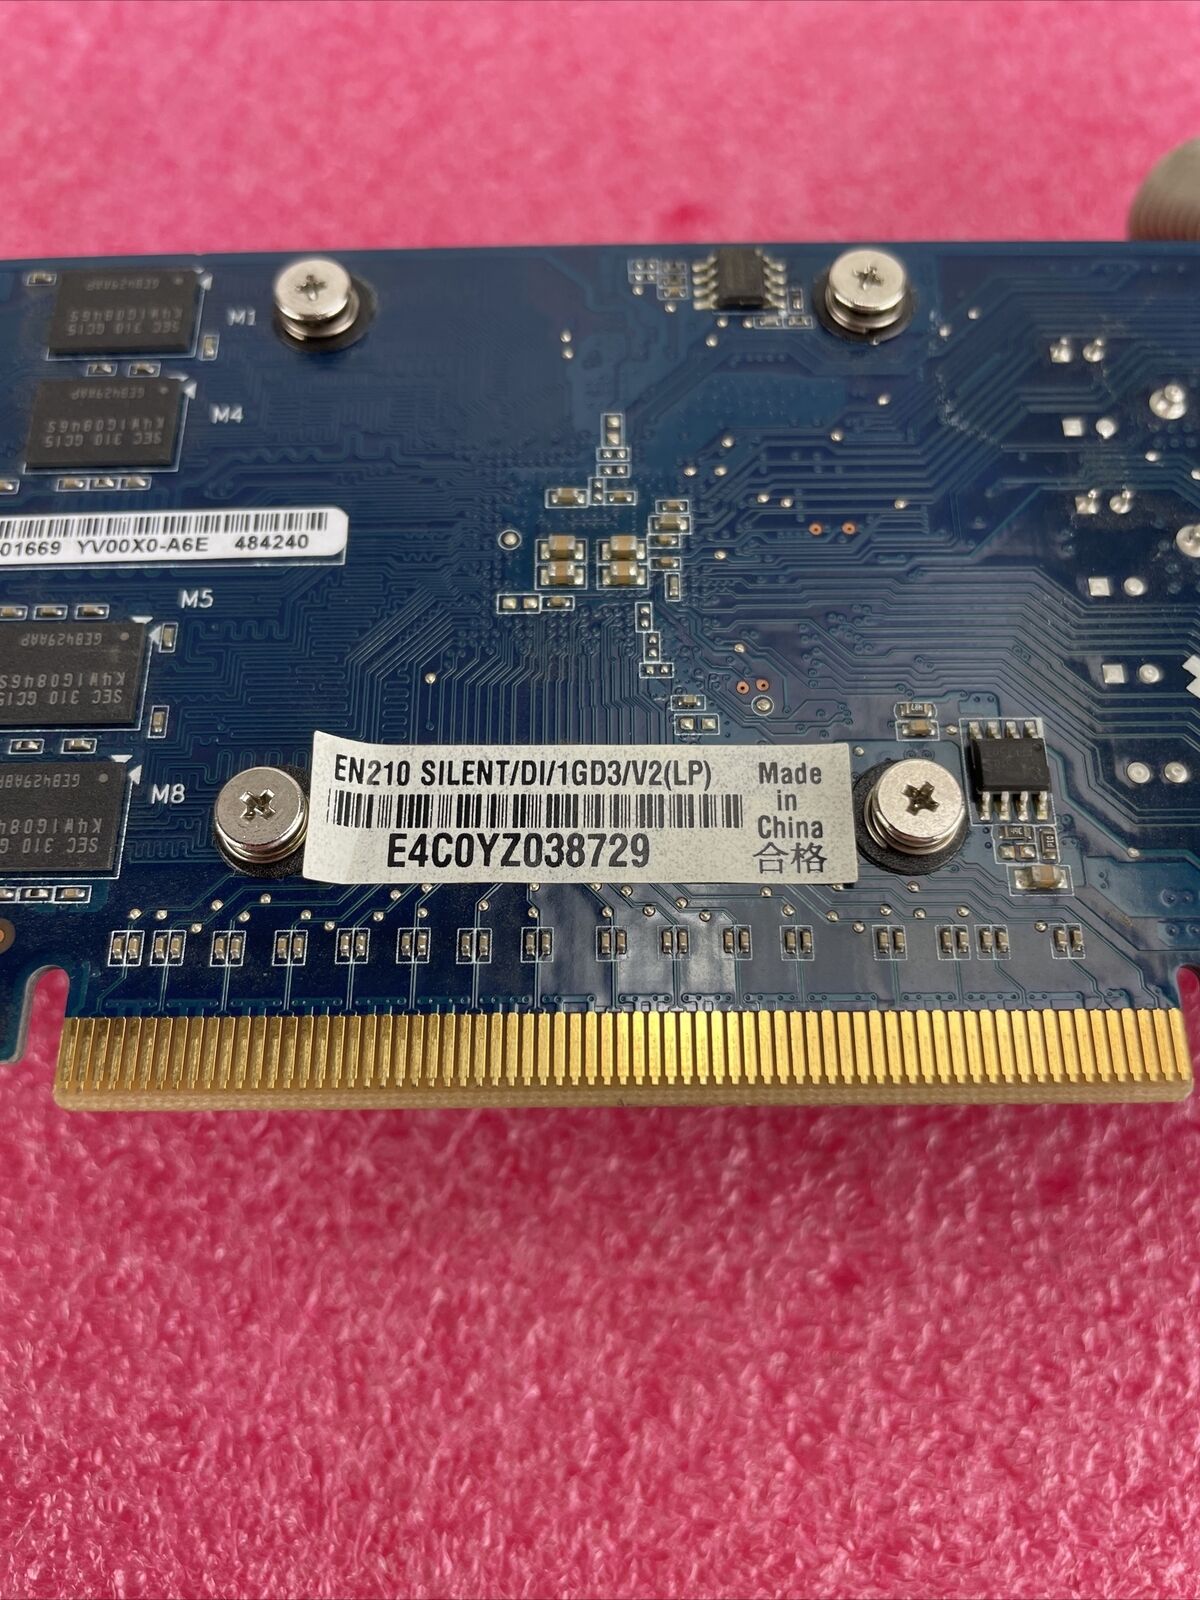 ASUS EN210 Silent/DI/1GD3-V2(LP) PCIe Graphics Card